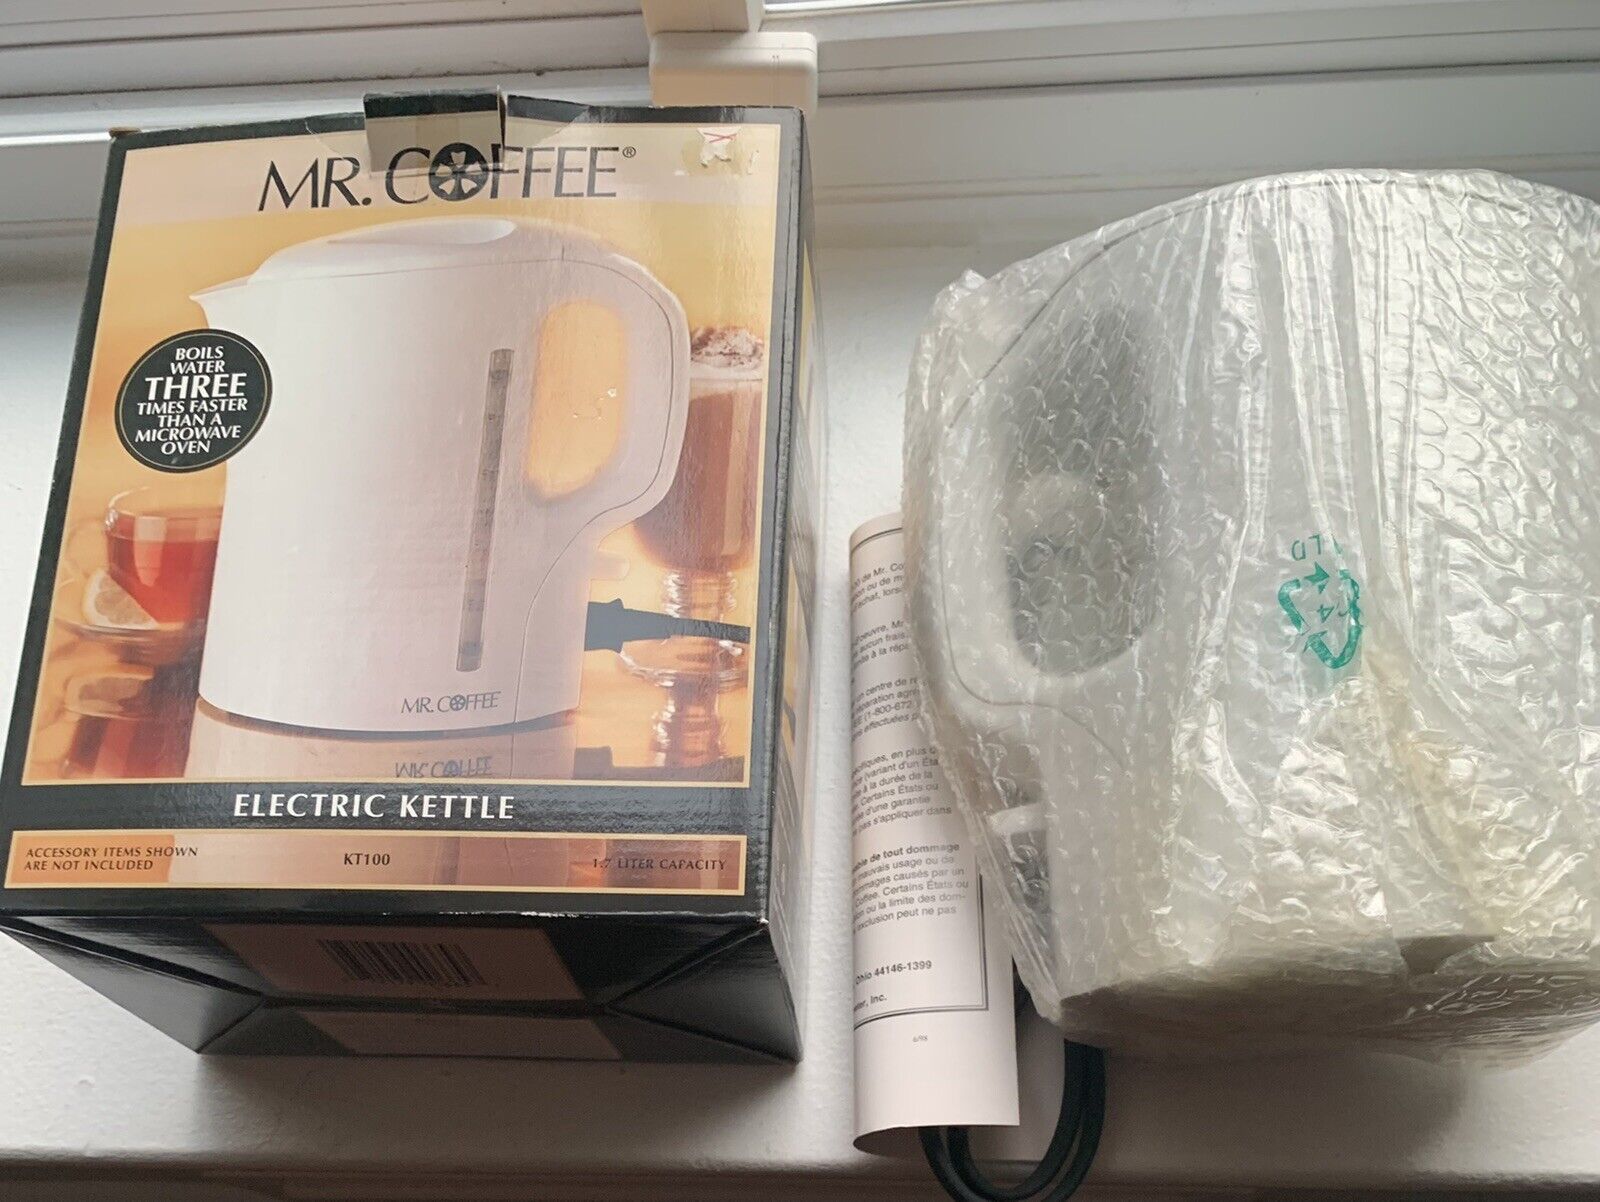 Mr. Coffee 1.7 Liter Digital Electric Kettle, Brushed Stainless Steel 